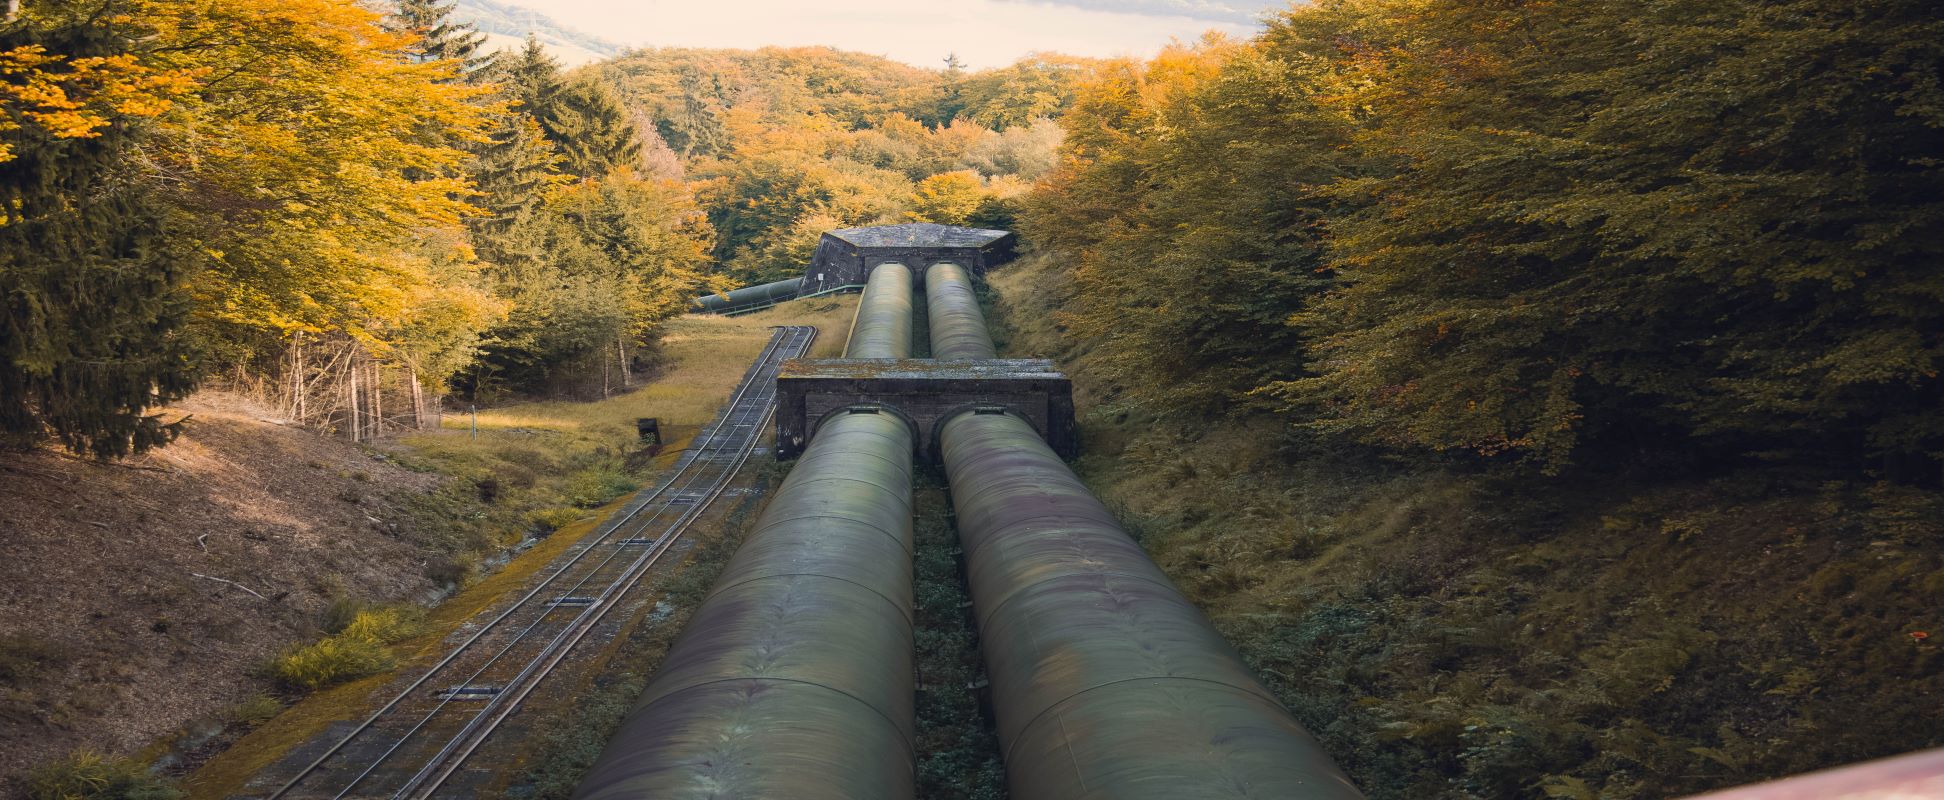 gas pipeline runs through forest next to train tracks